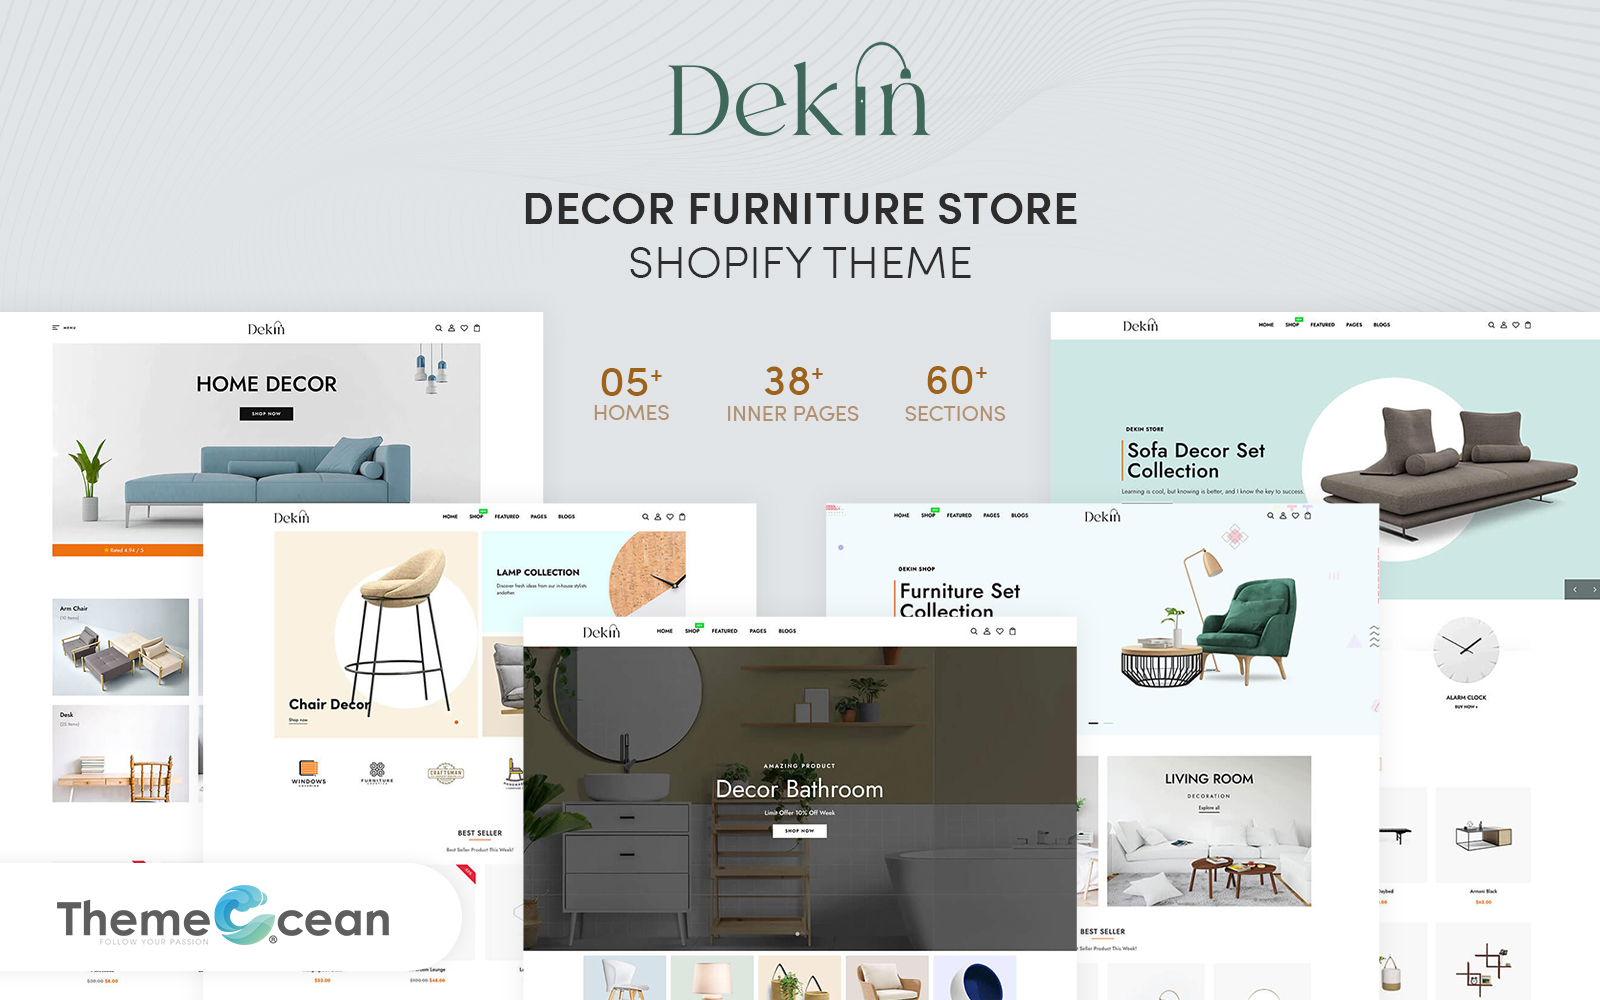 Dekin - Decor Furniture Store Shopify Theme